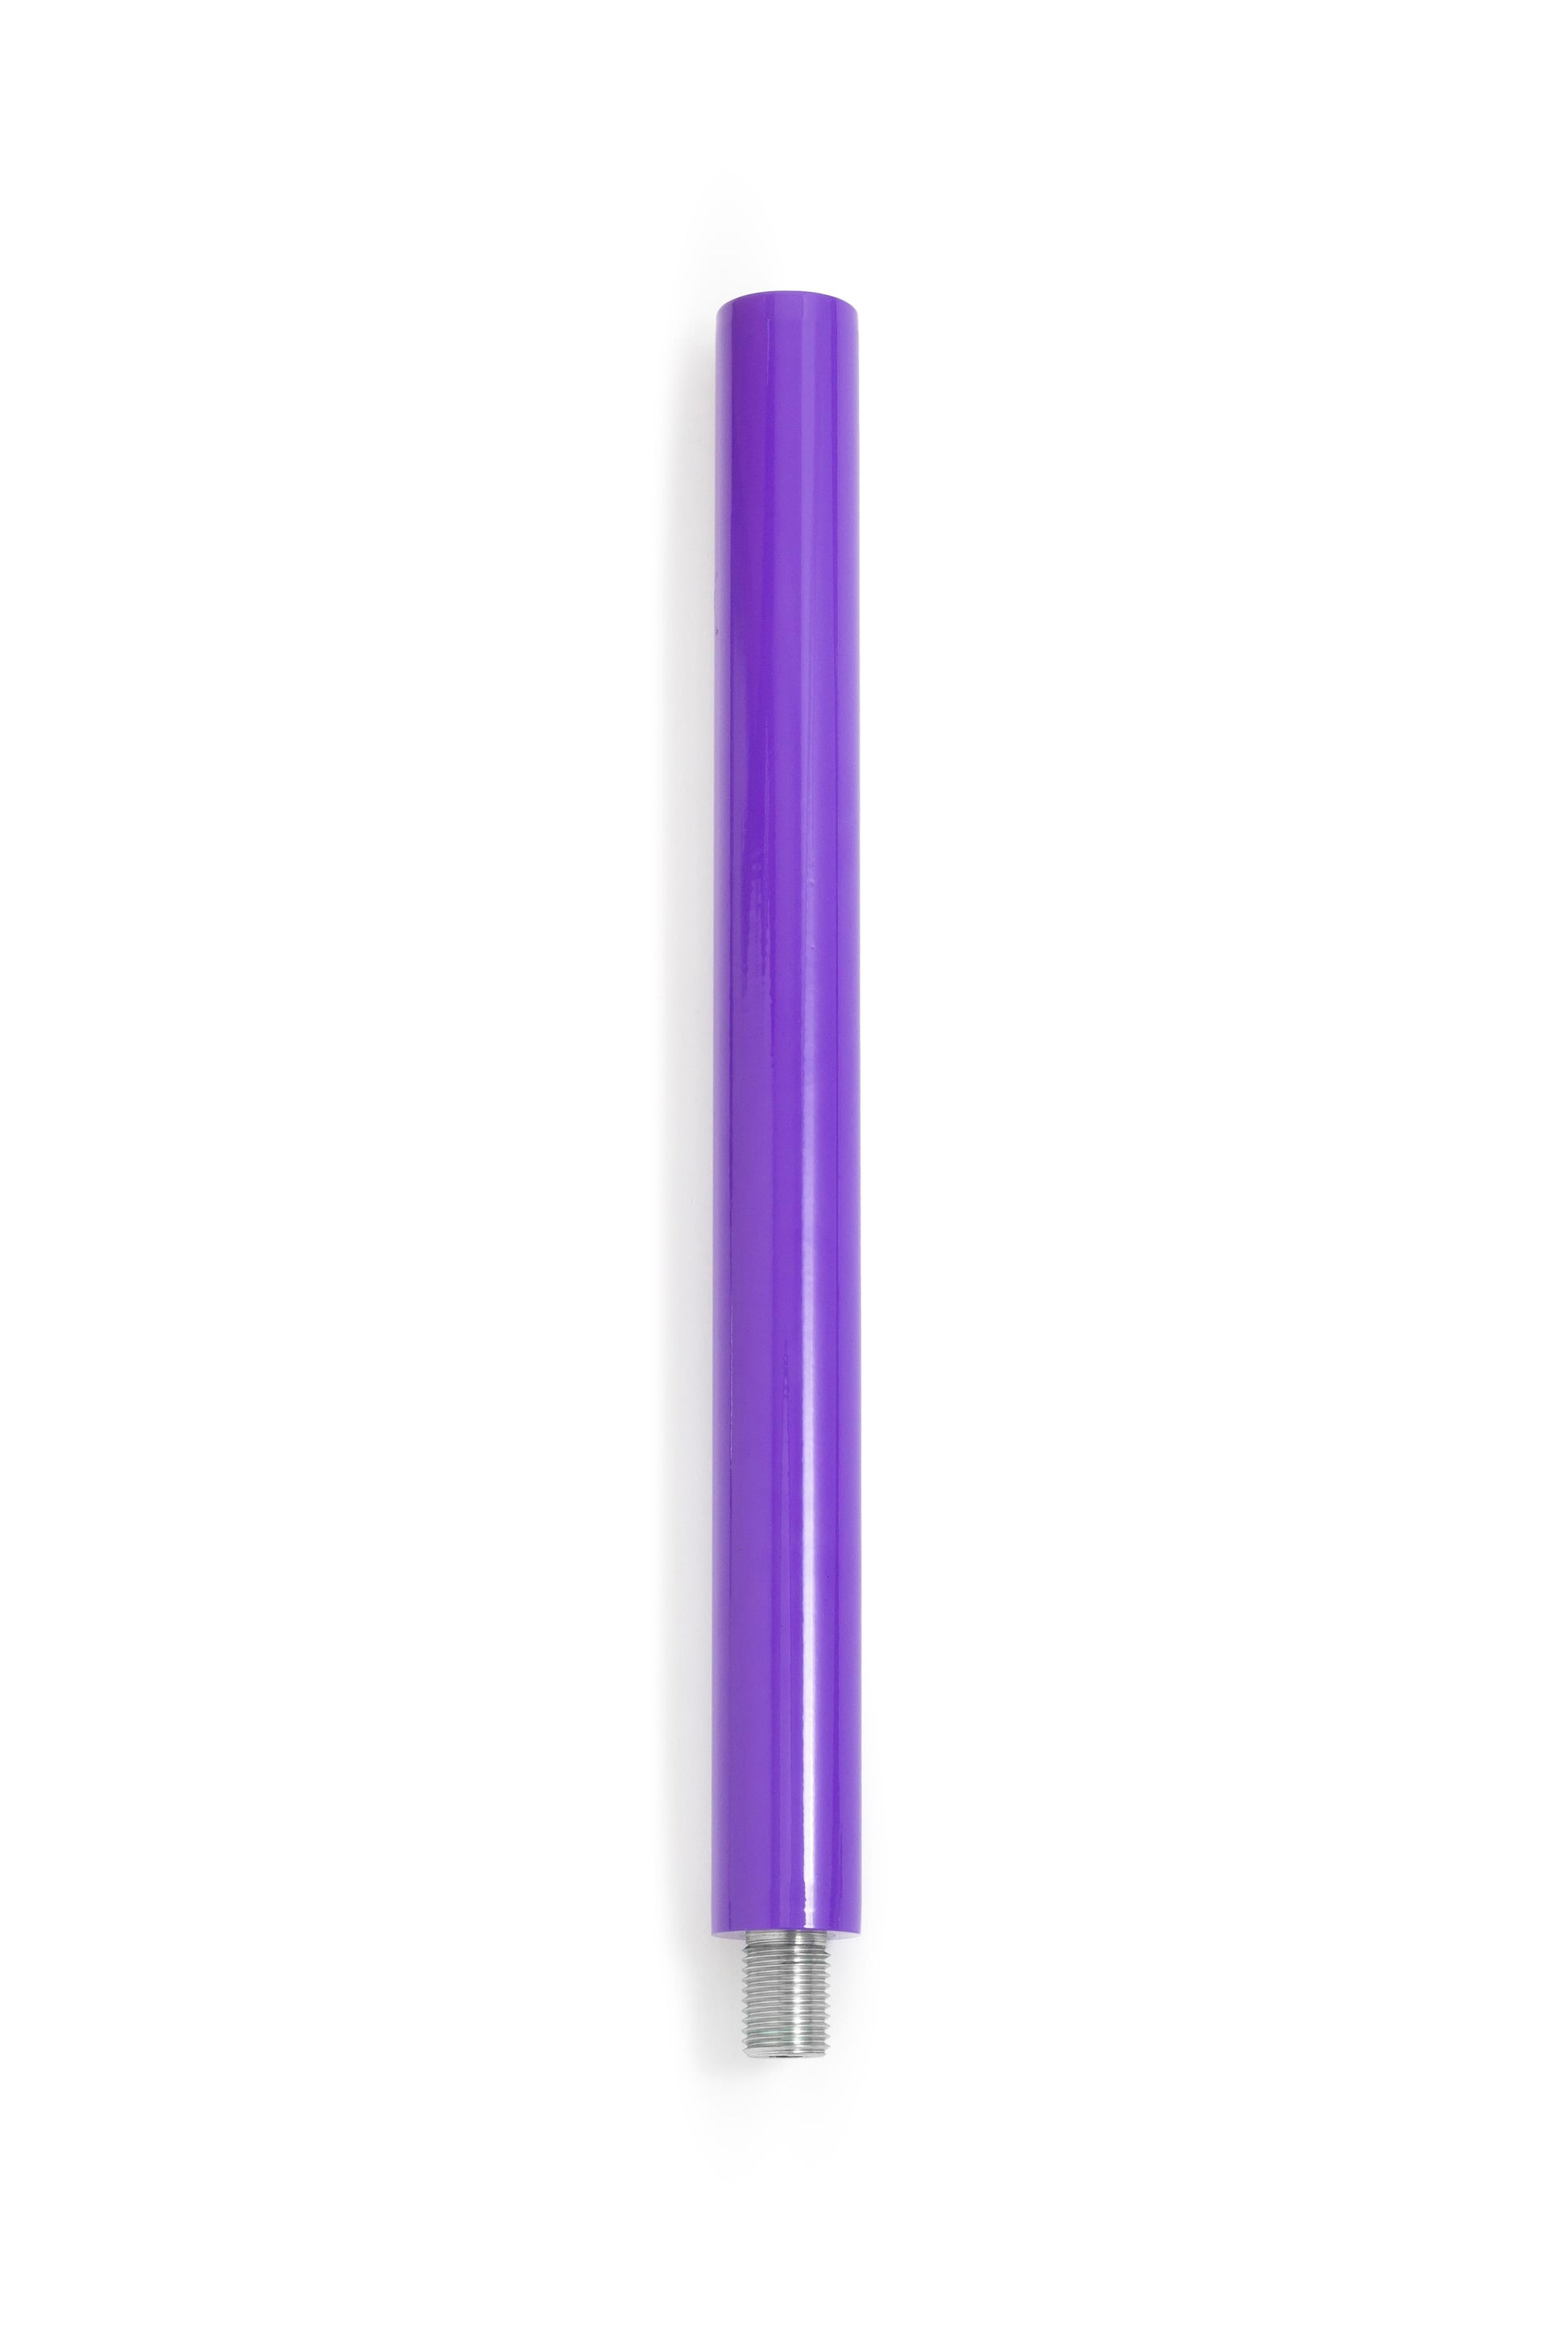 Portable dance Pole Extensions Purple Powder Coated